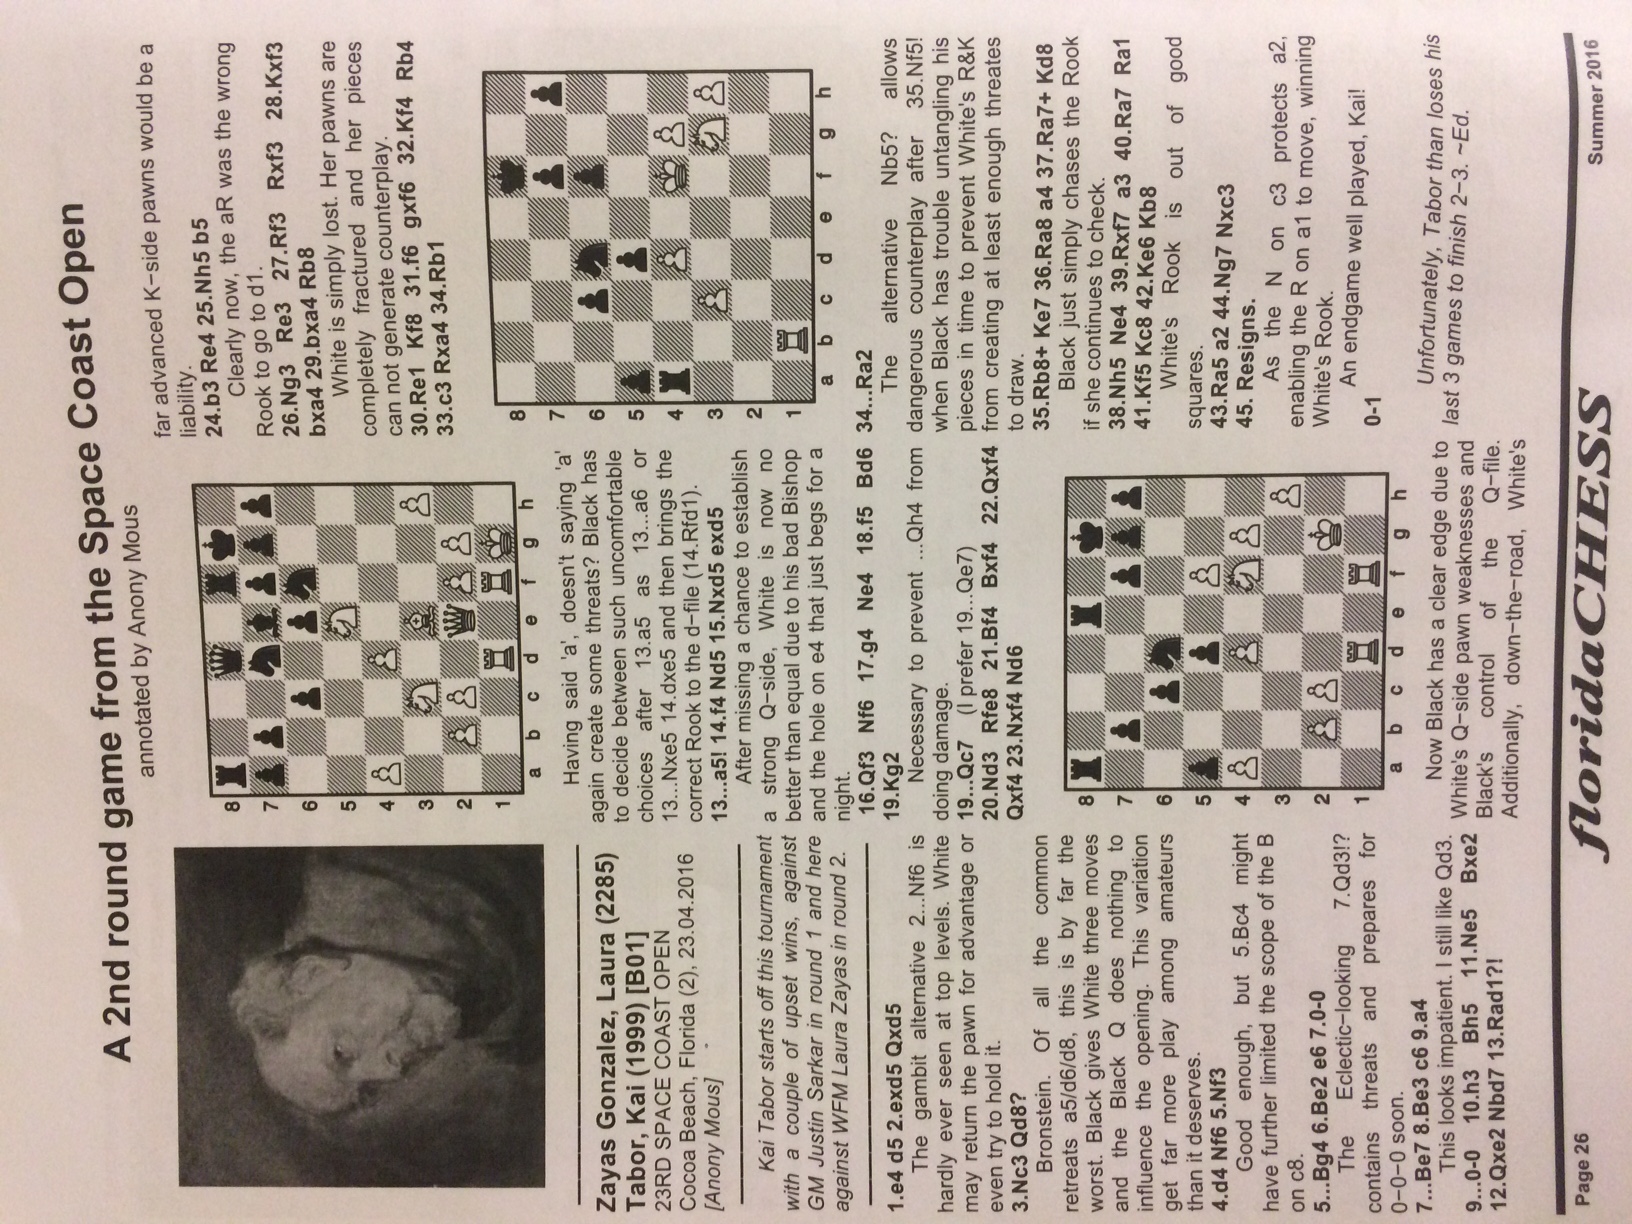 London Chess Classic 2011 - News - SimpleChess